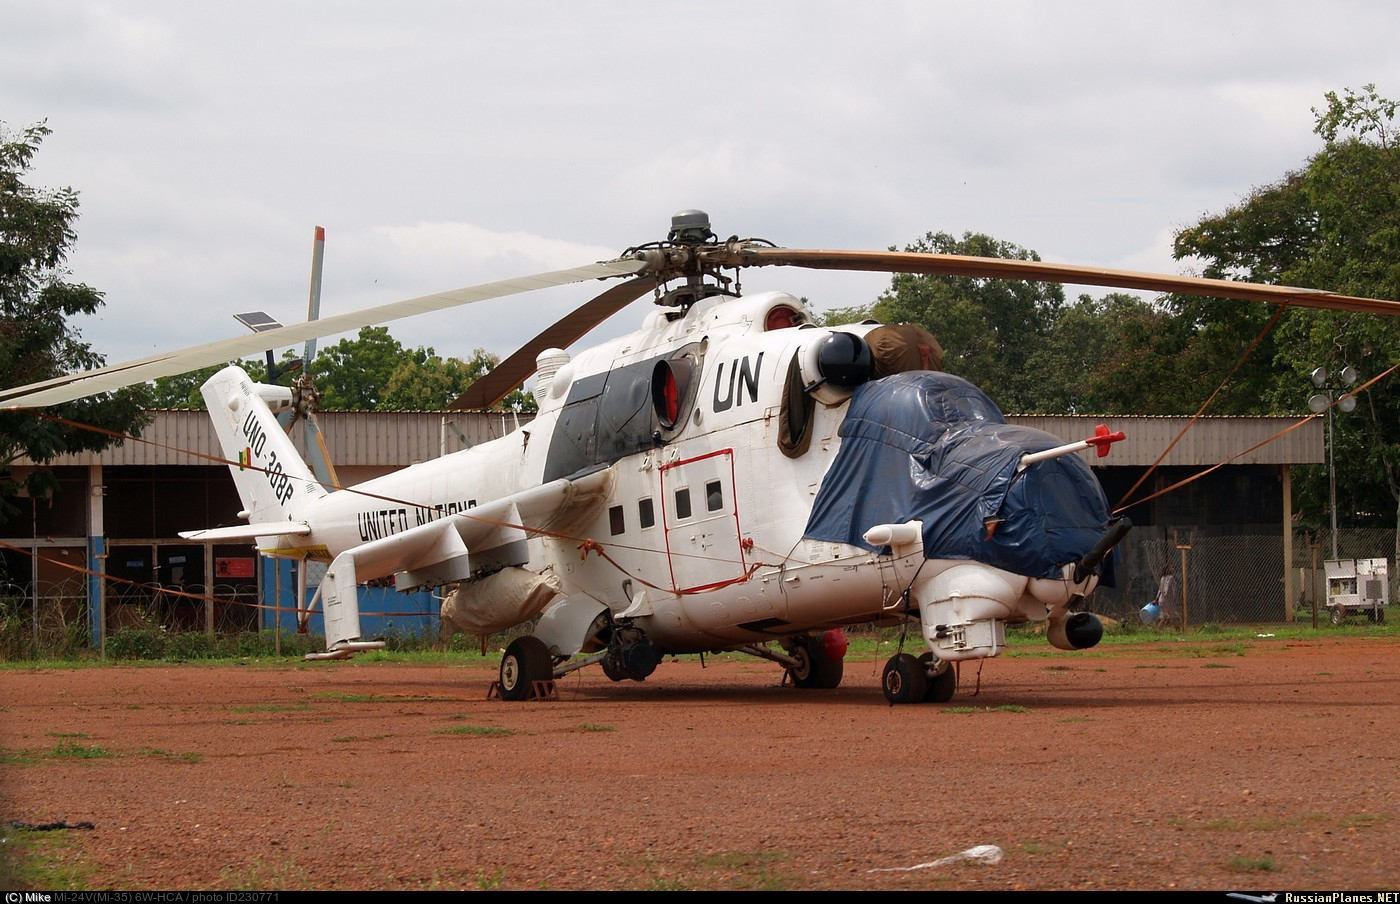 Mi-24V (upgrade for Senegal)   6W-HCA